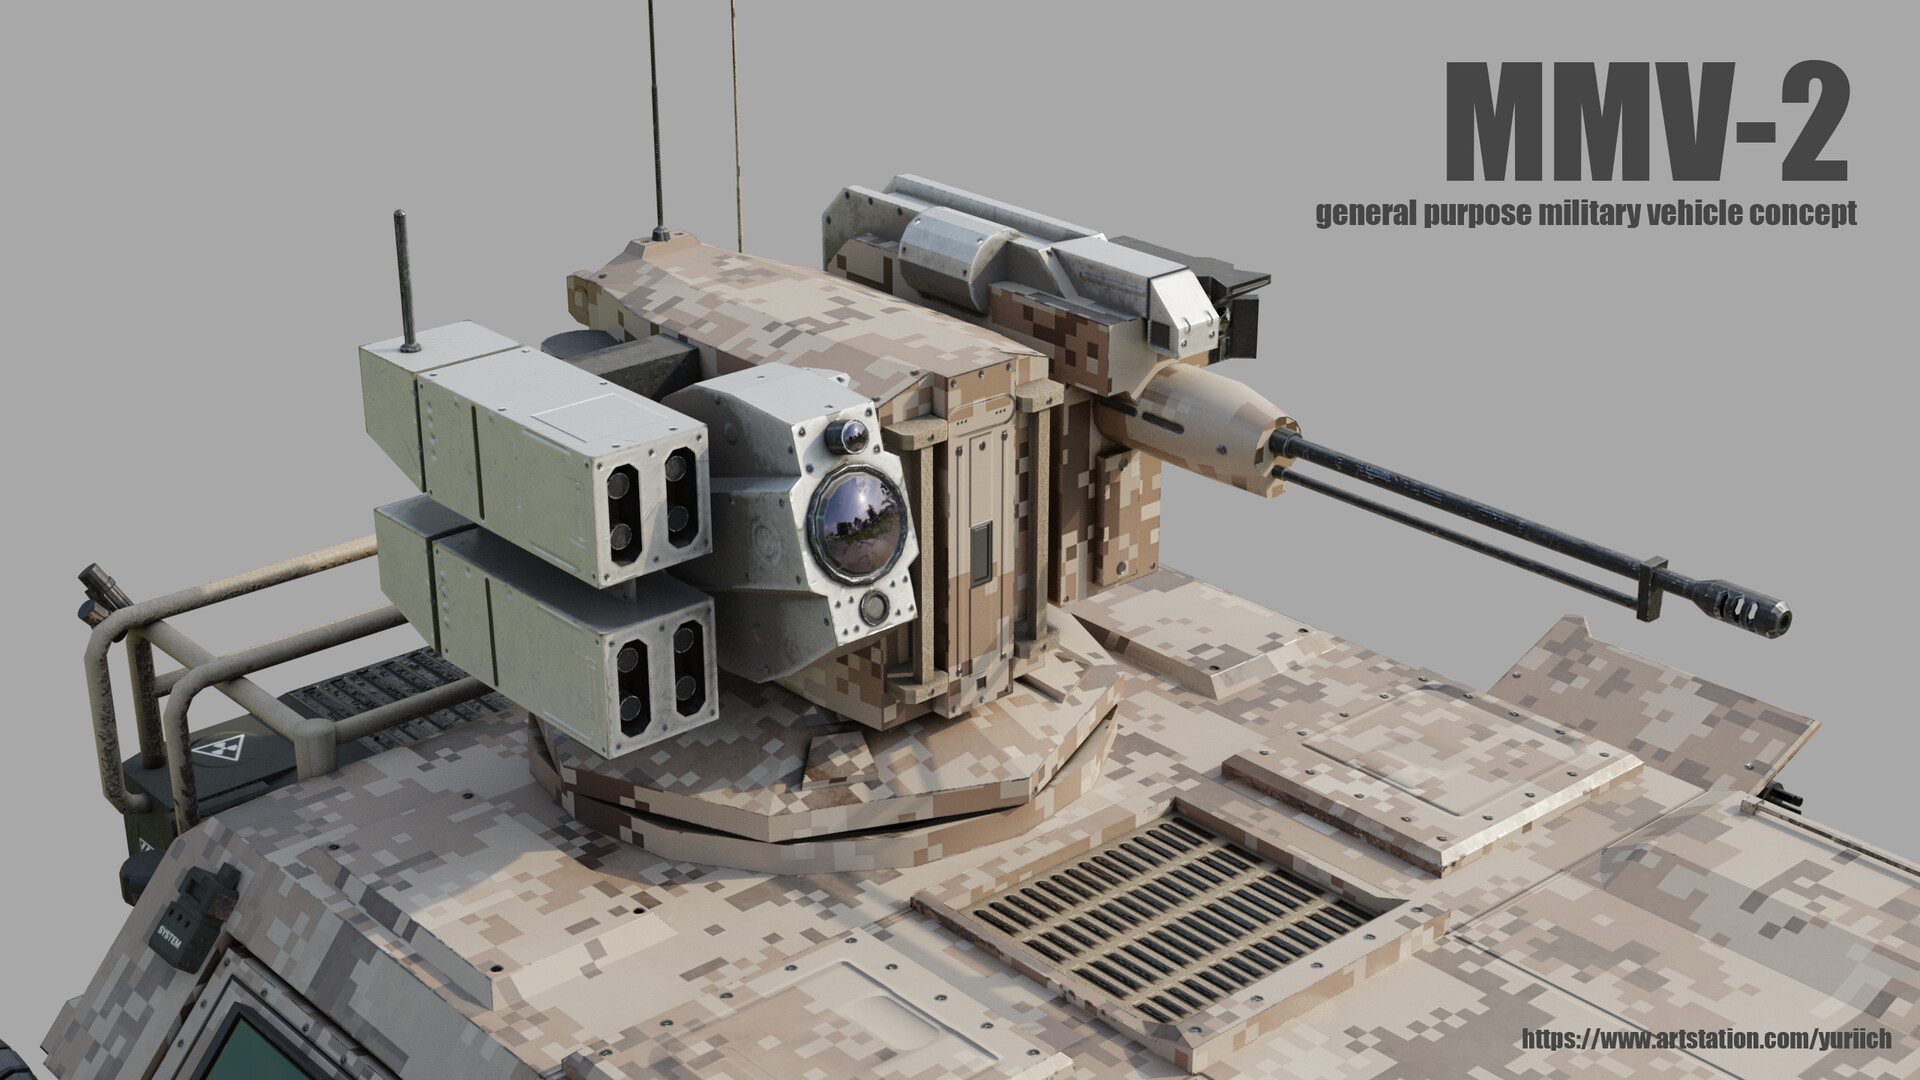 futuristic military vehicles concept art